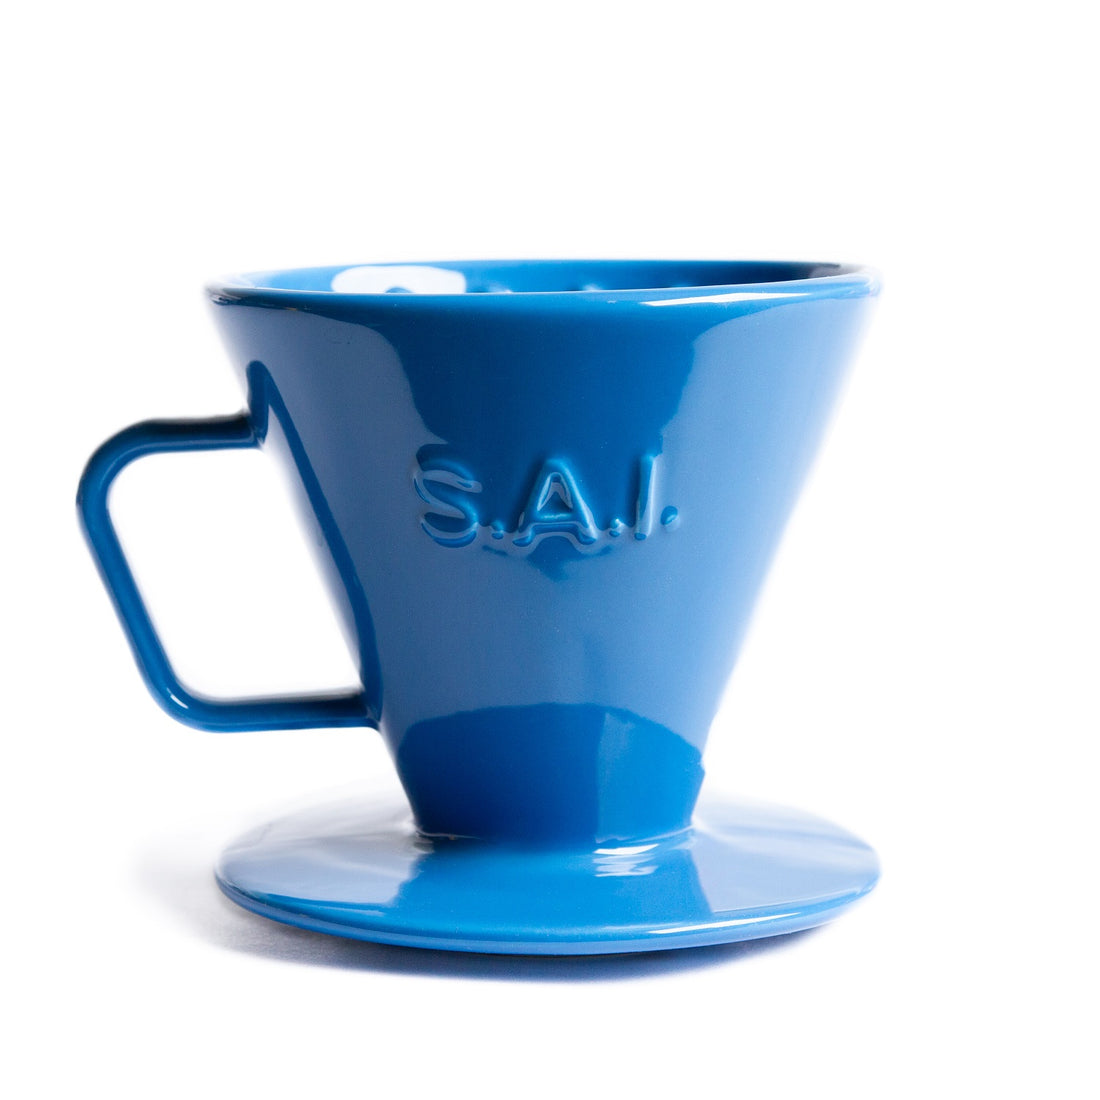 Saint Anthony Industries C70 Ceramic Pourover Brewer - Blue